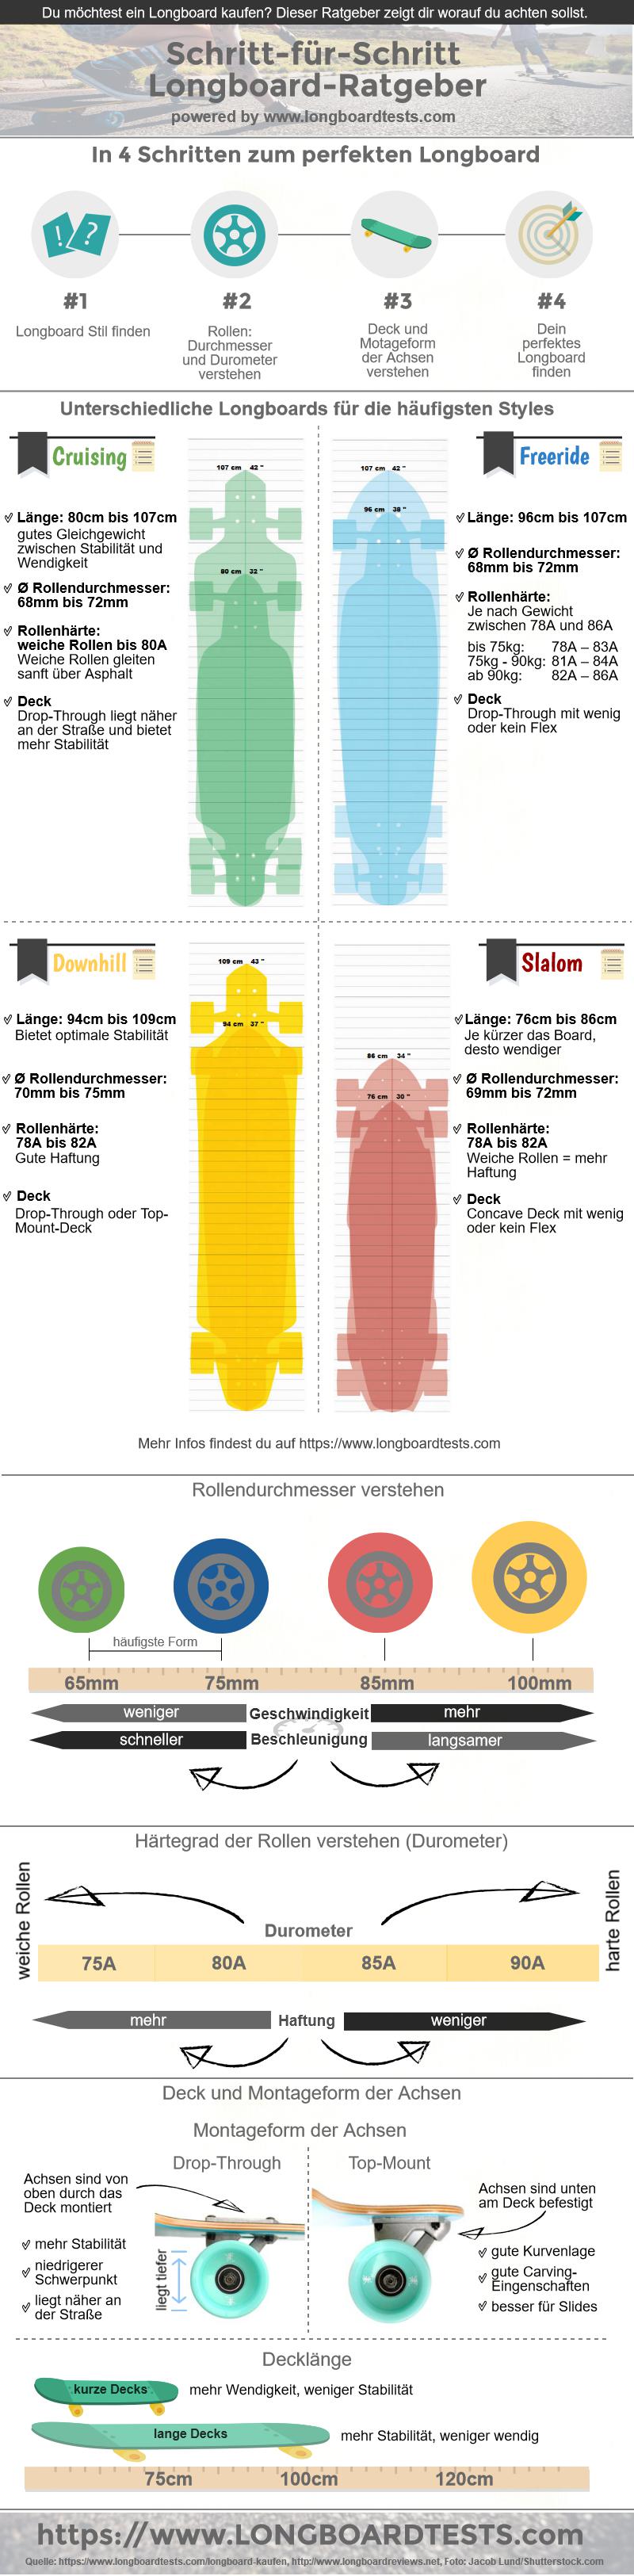 Longboard kaufen: Der Ratgeber als Infografik